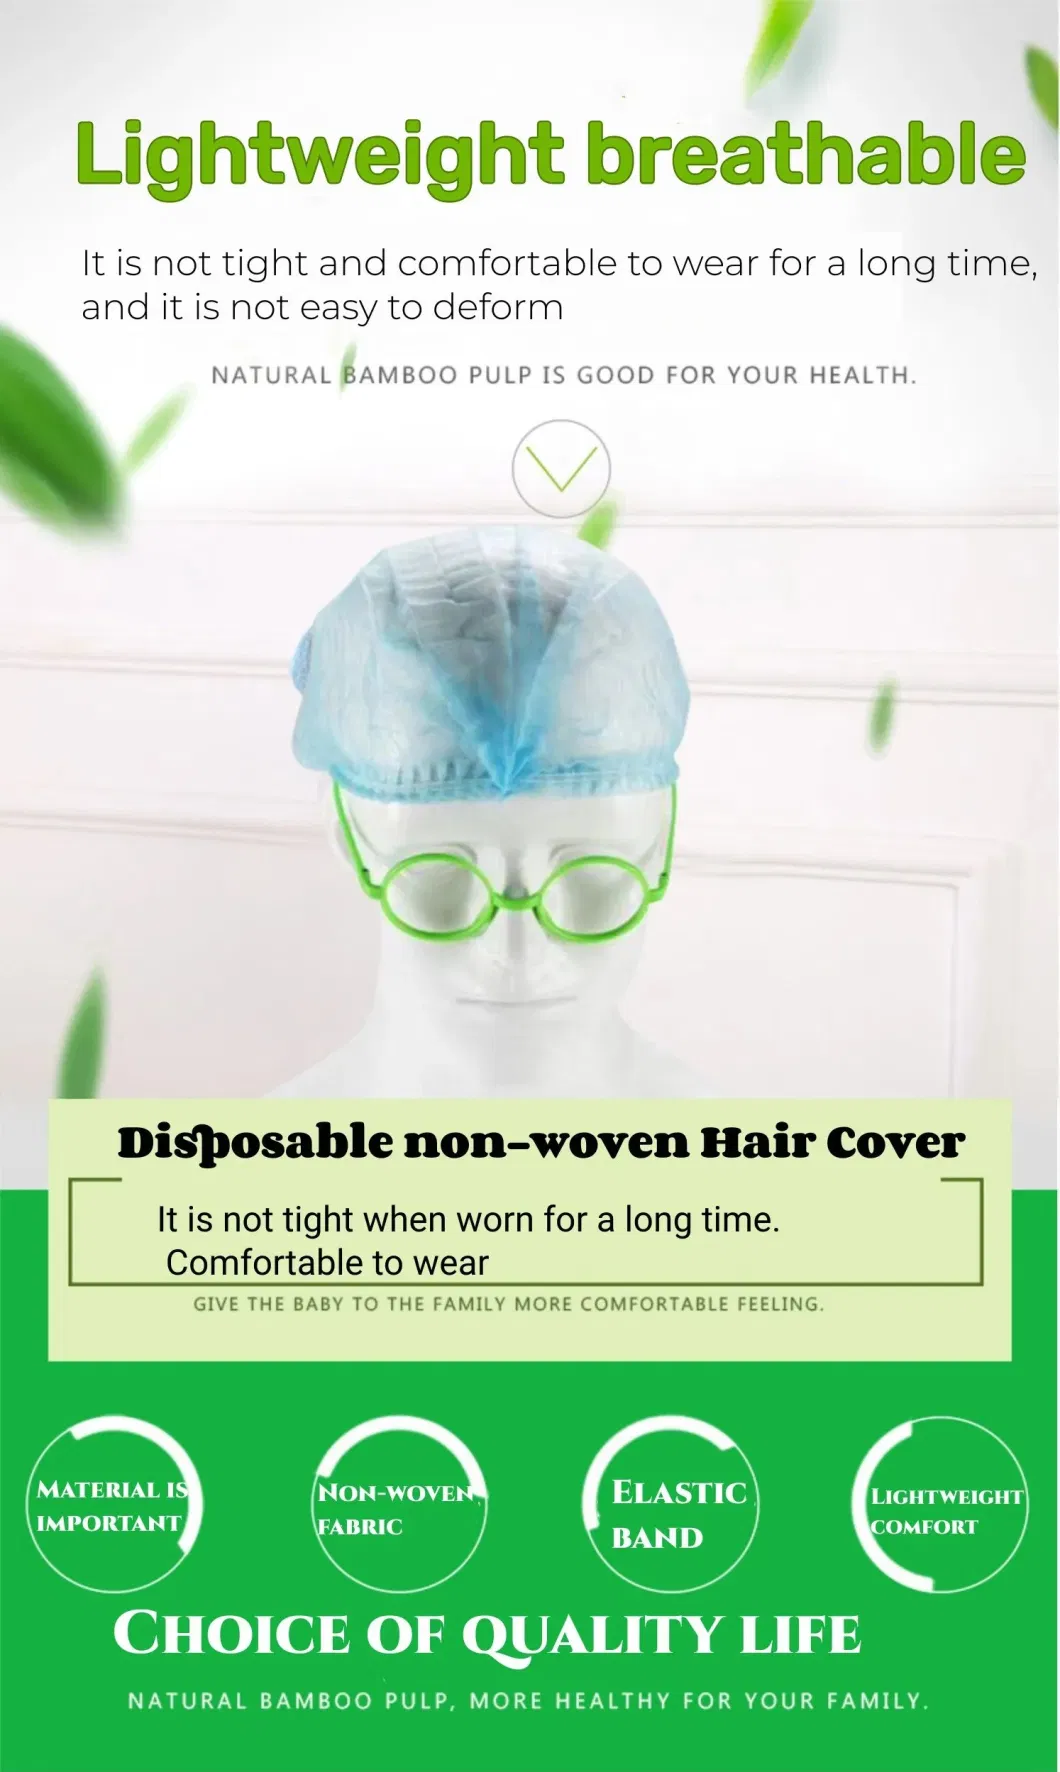 ODM High Quality Disposable PP Non Woven Strip Bouffant Head Cover Hair Clip Cap